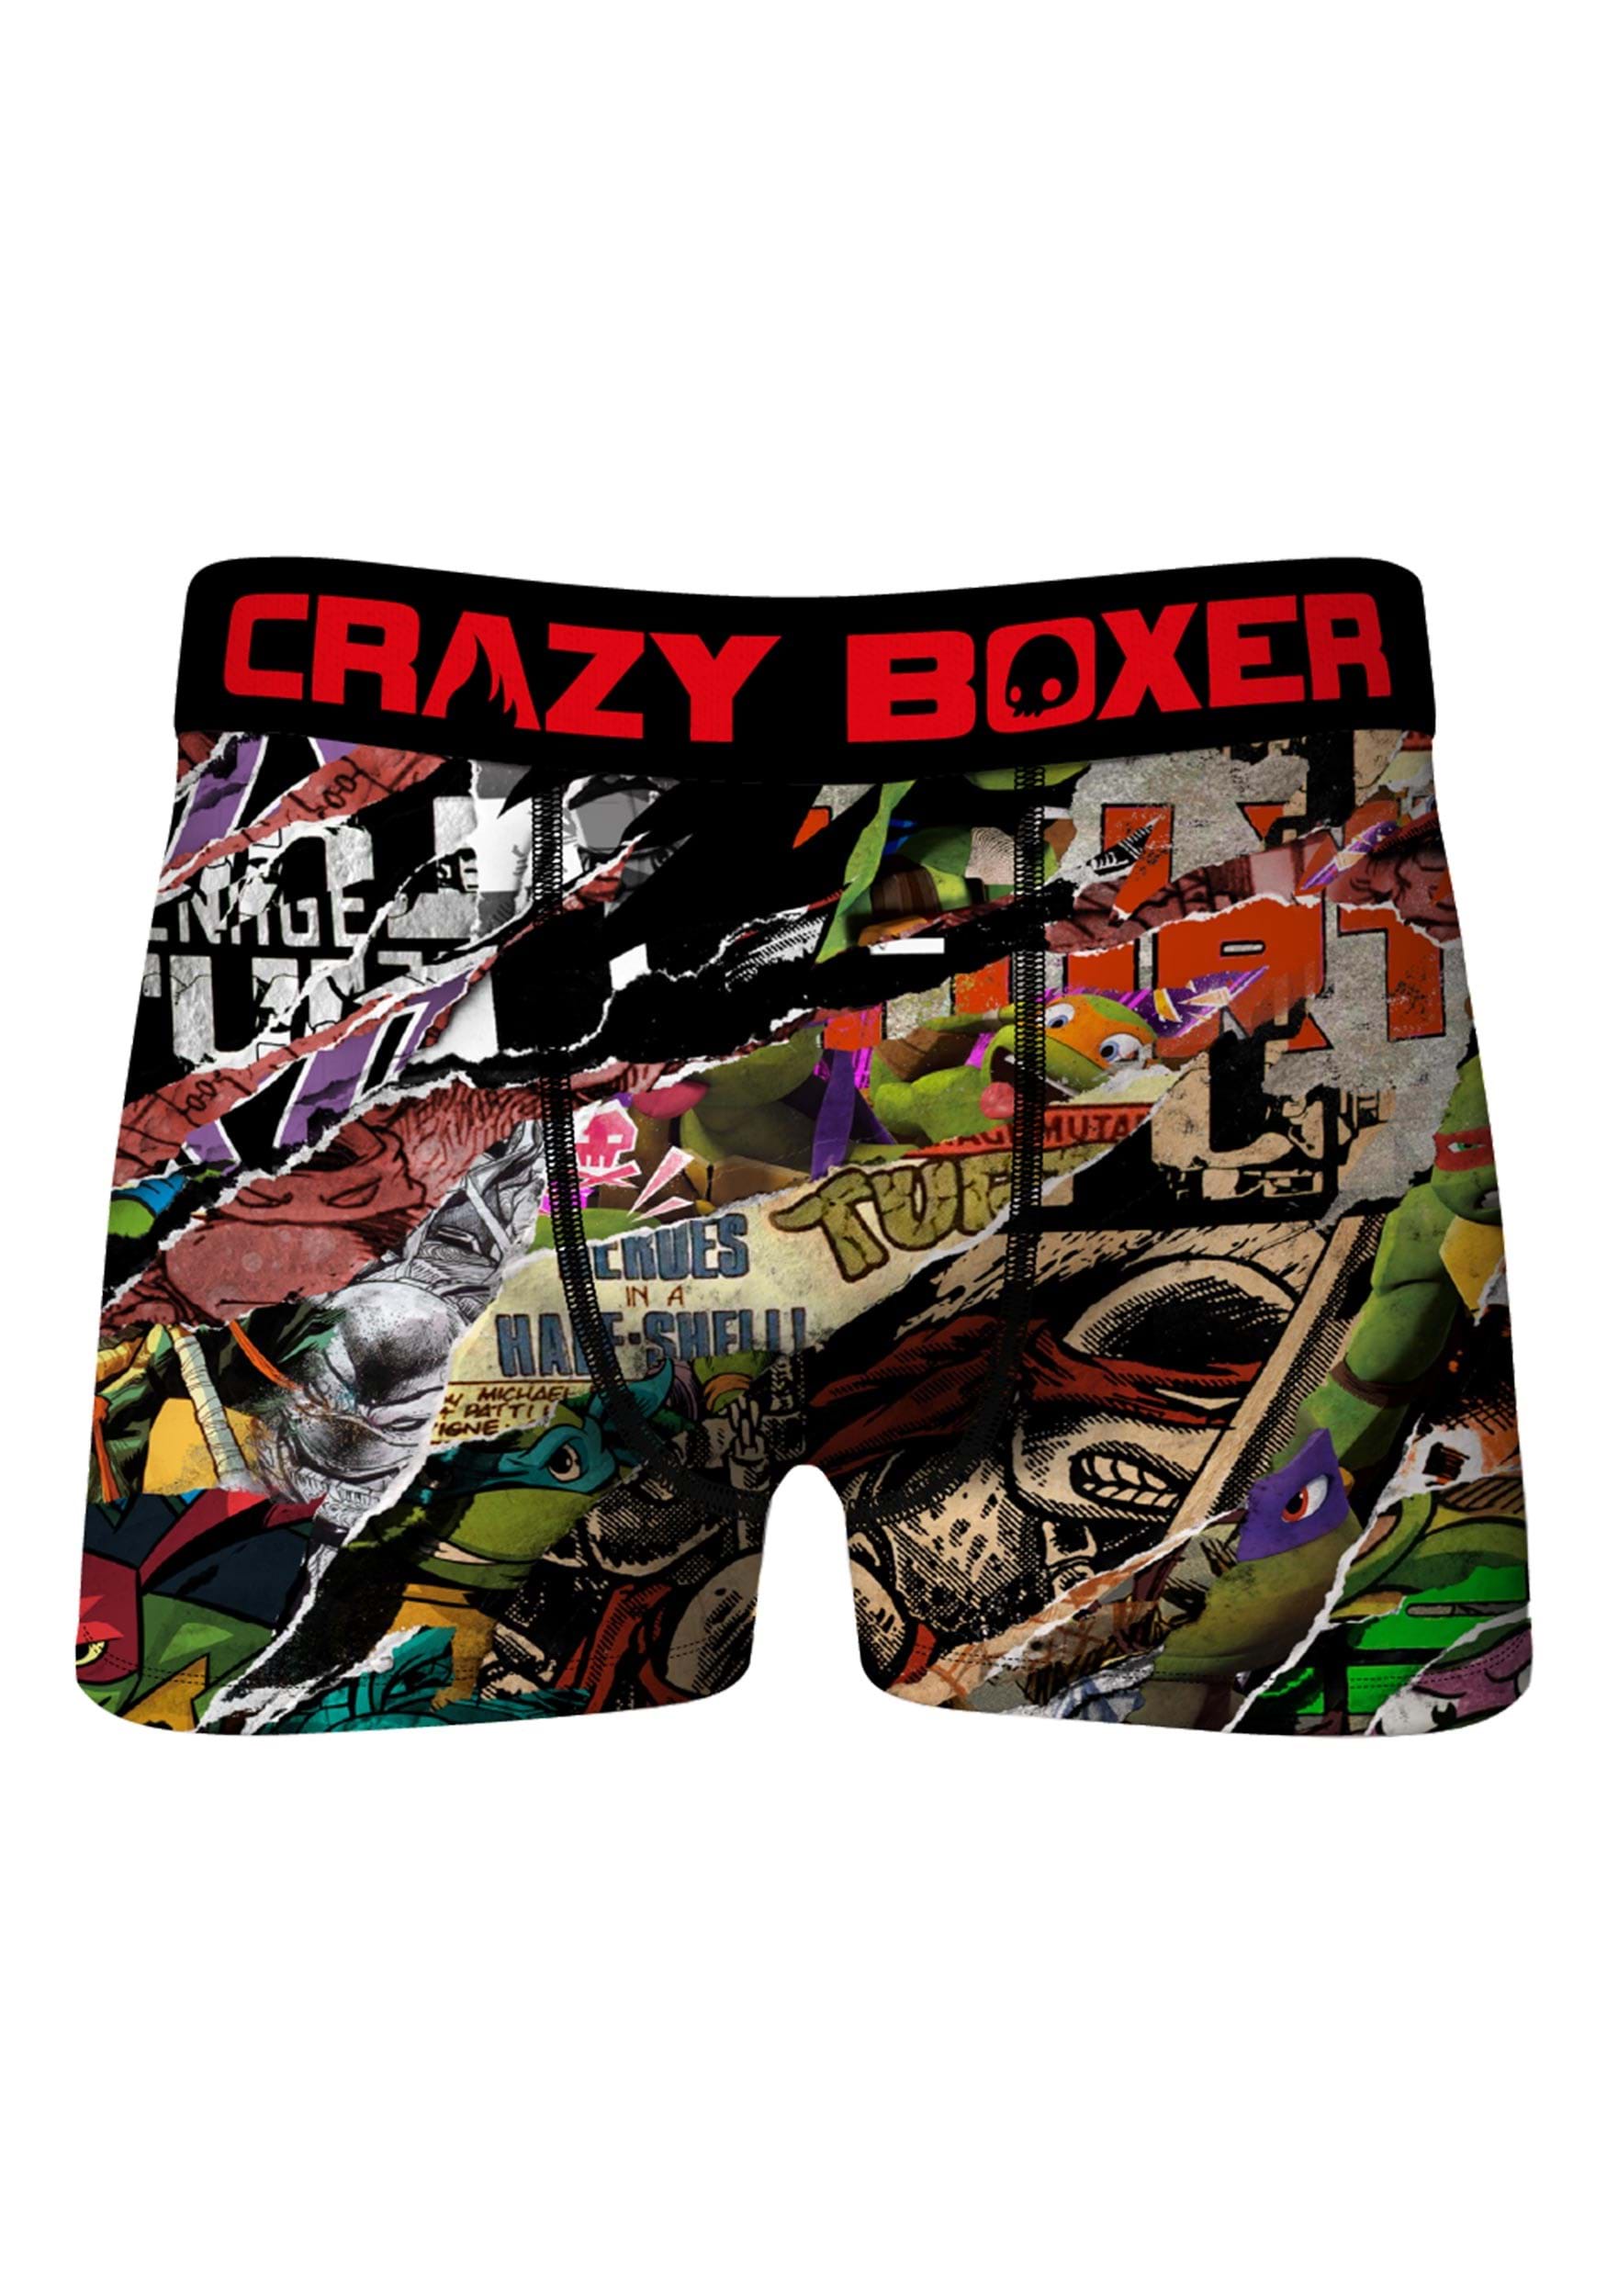 Crazy Boxers Ninja Turtles Medley Boxer Briefs for Men